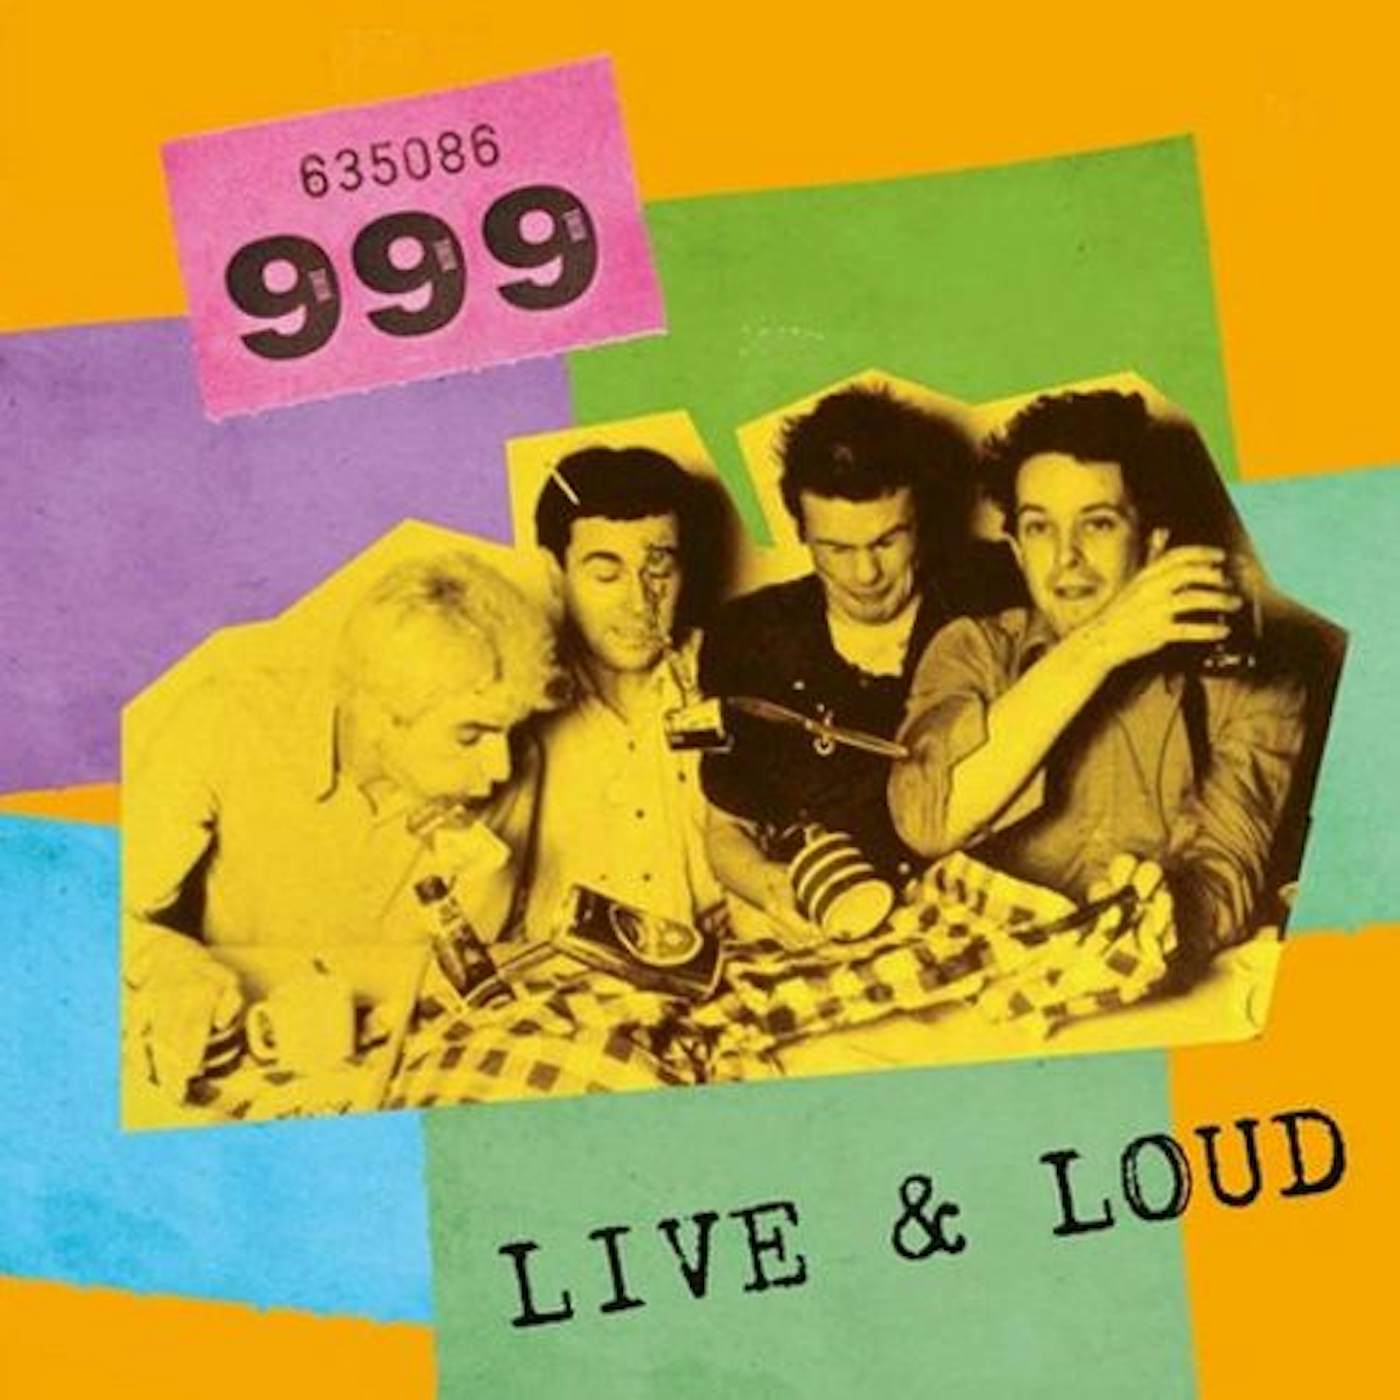 999 Live & Loud Vinyl Record